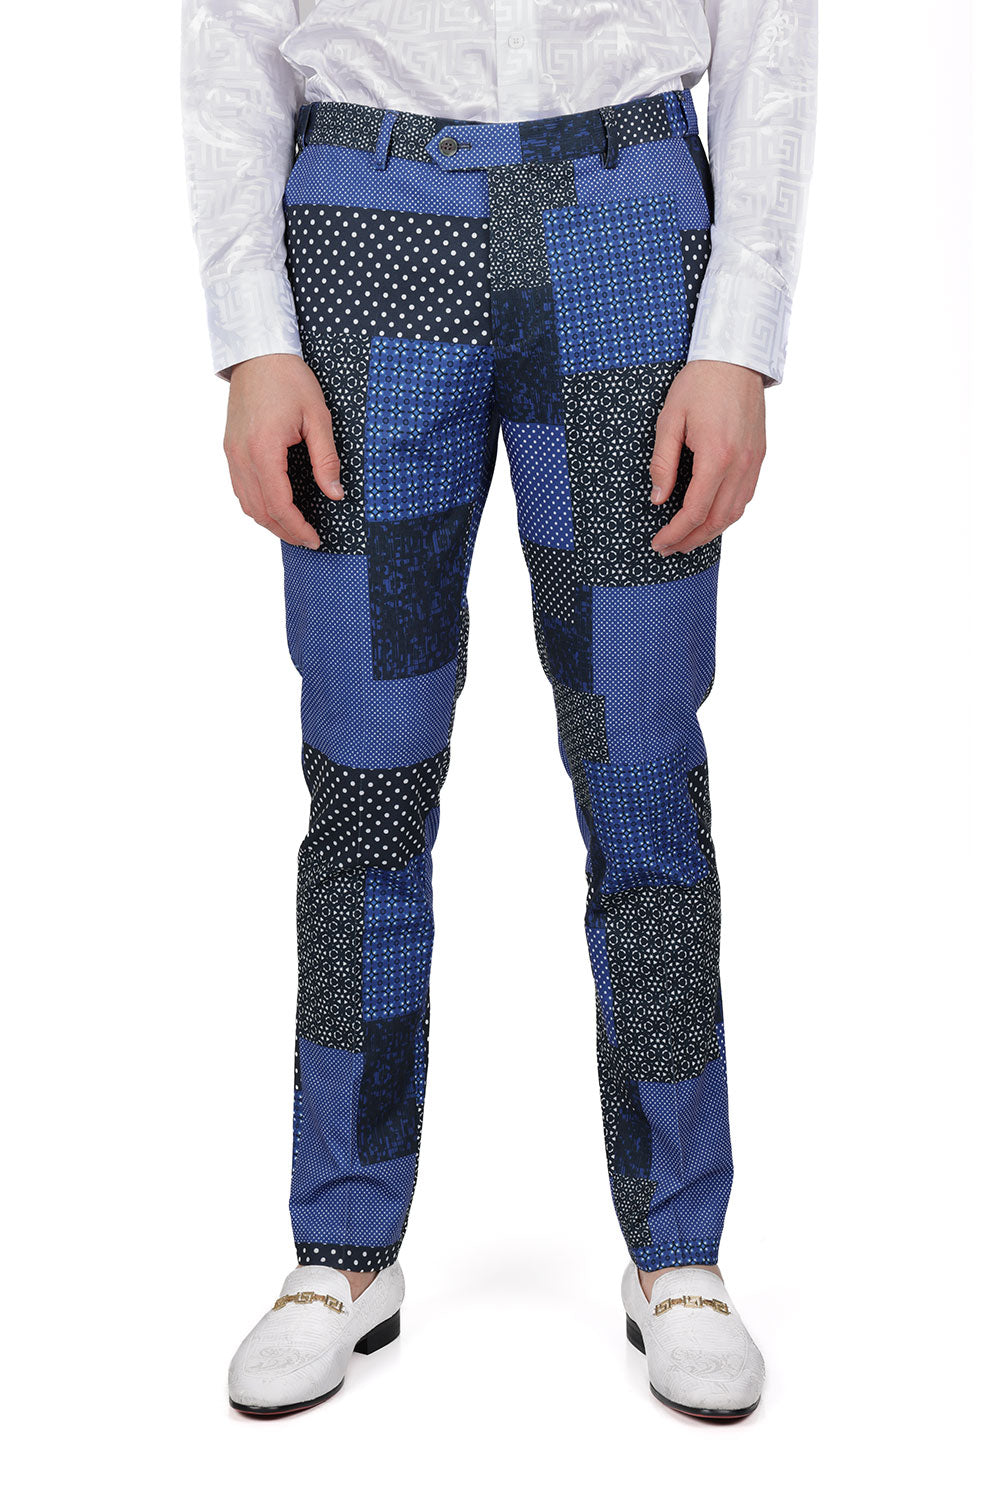 BARABAS men's checkered plaid blue checkers luxury chino pants CP163 Blue Checkers